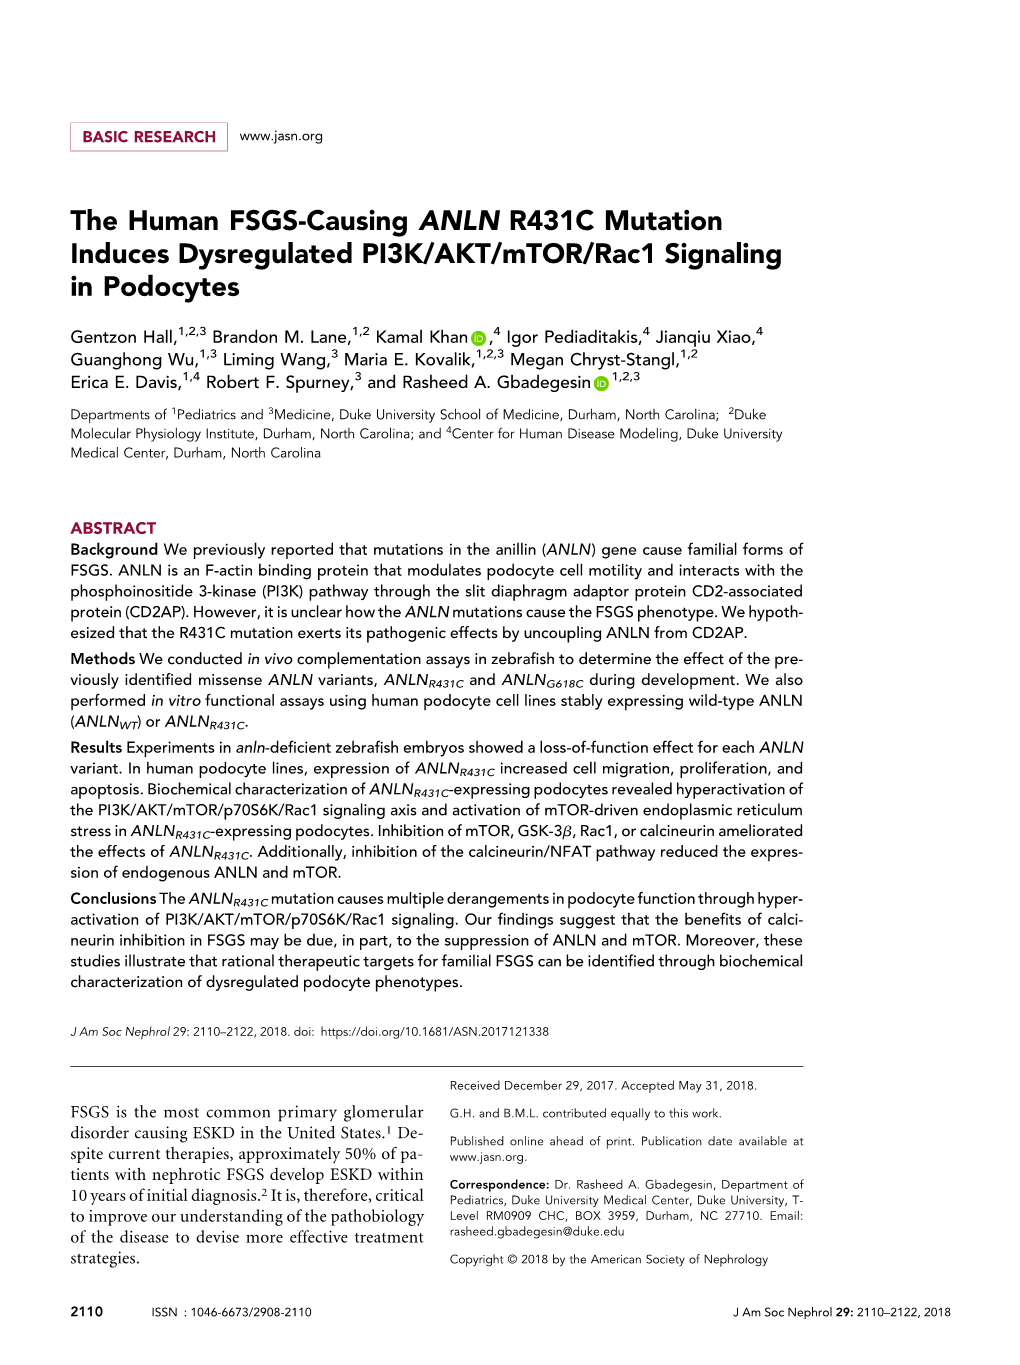 The Human FSGS-Causing ANLN R431C Mutation Induces Dysregulated PI3K/AKT/Mtor/Rac1 Signaling in Podocytes